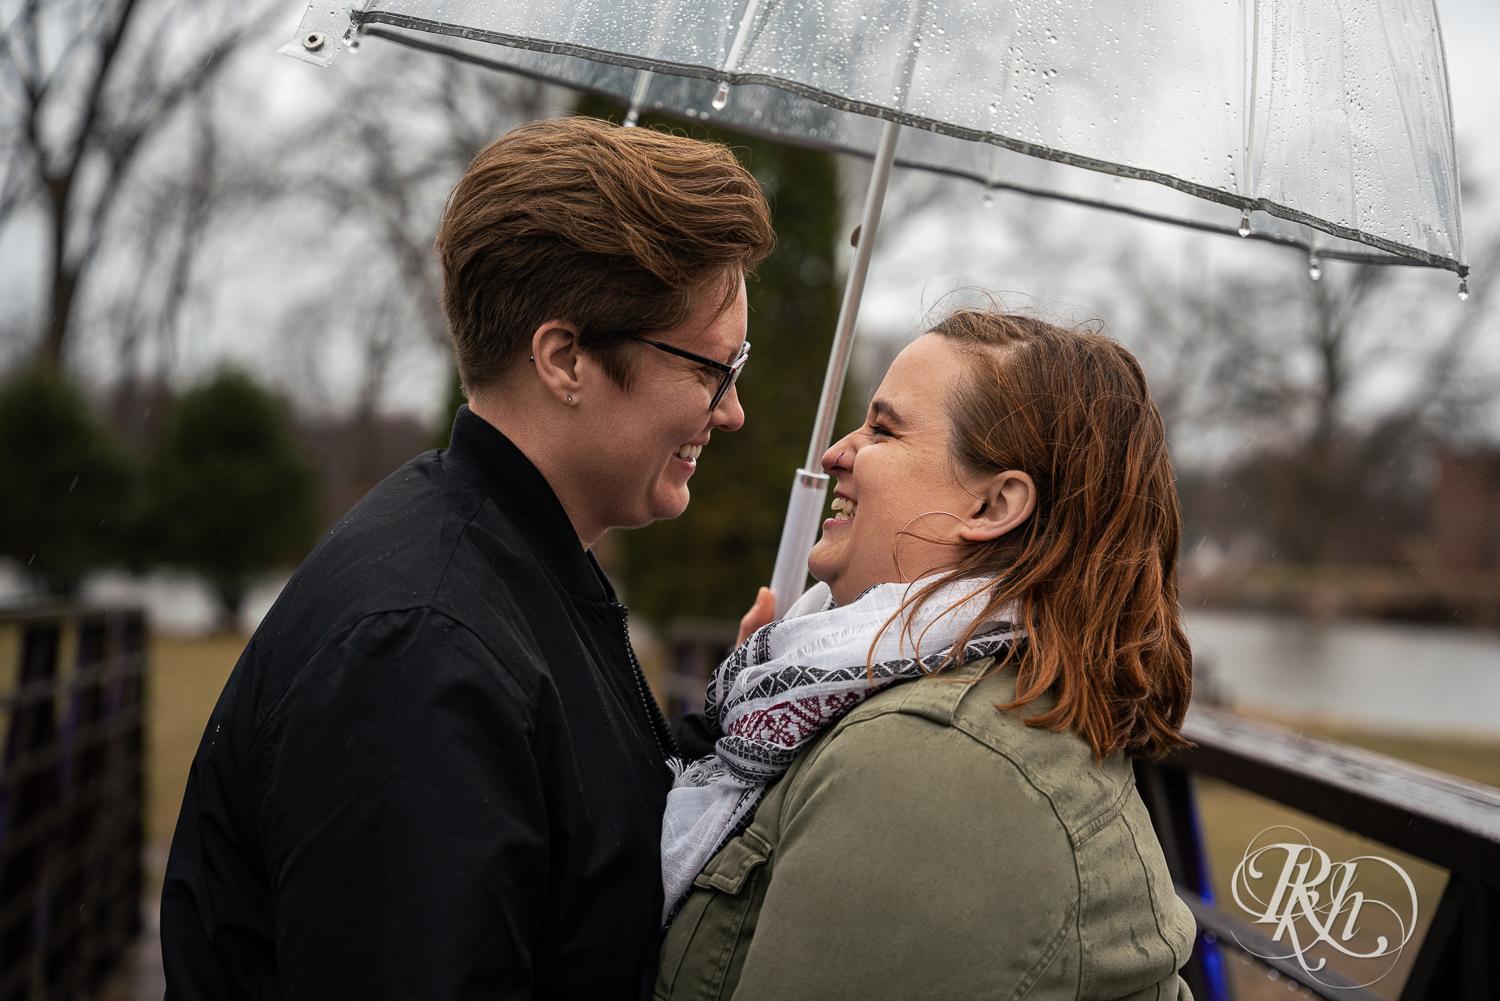 Lesbian couple smile in rain under umbrella at Saint Catherine's in Saint Paul, Minnesota. 